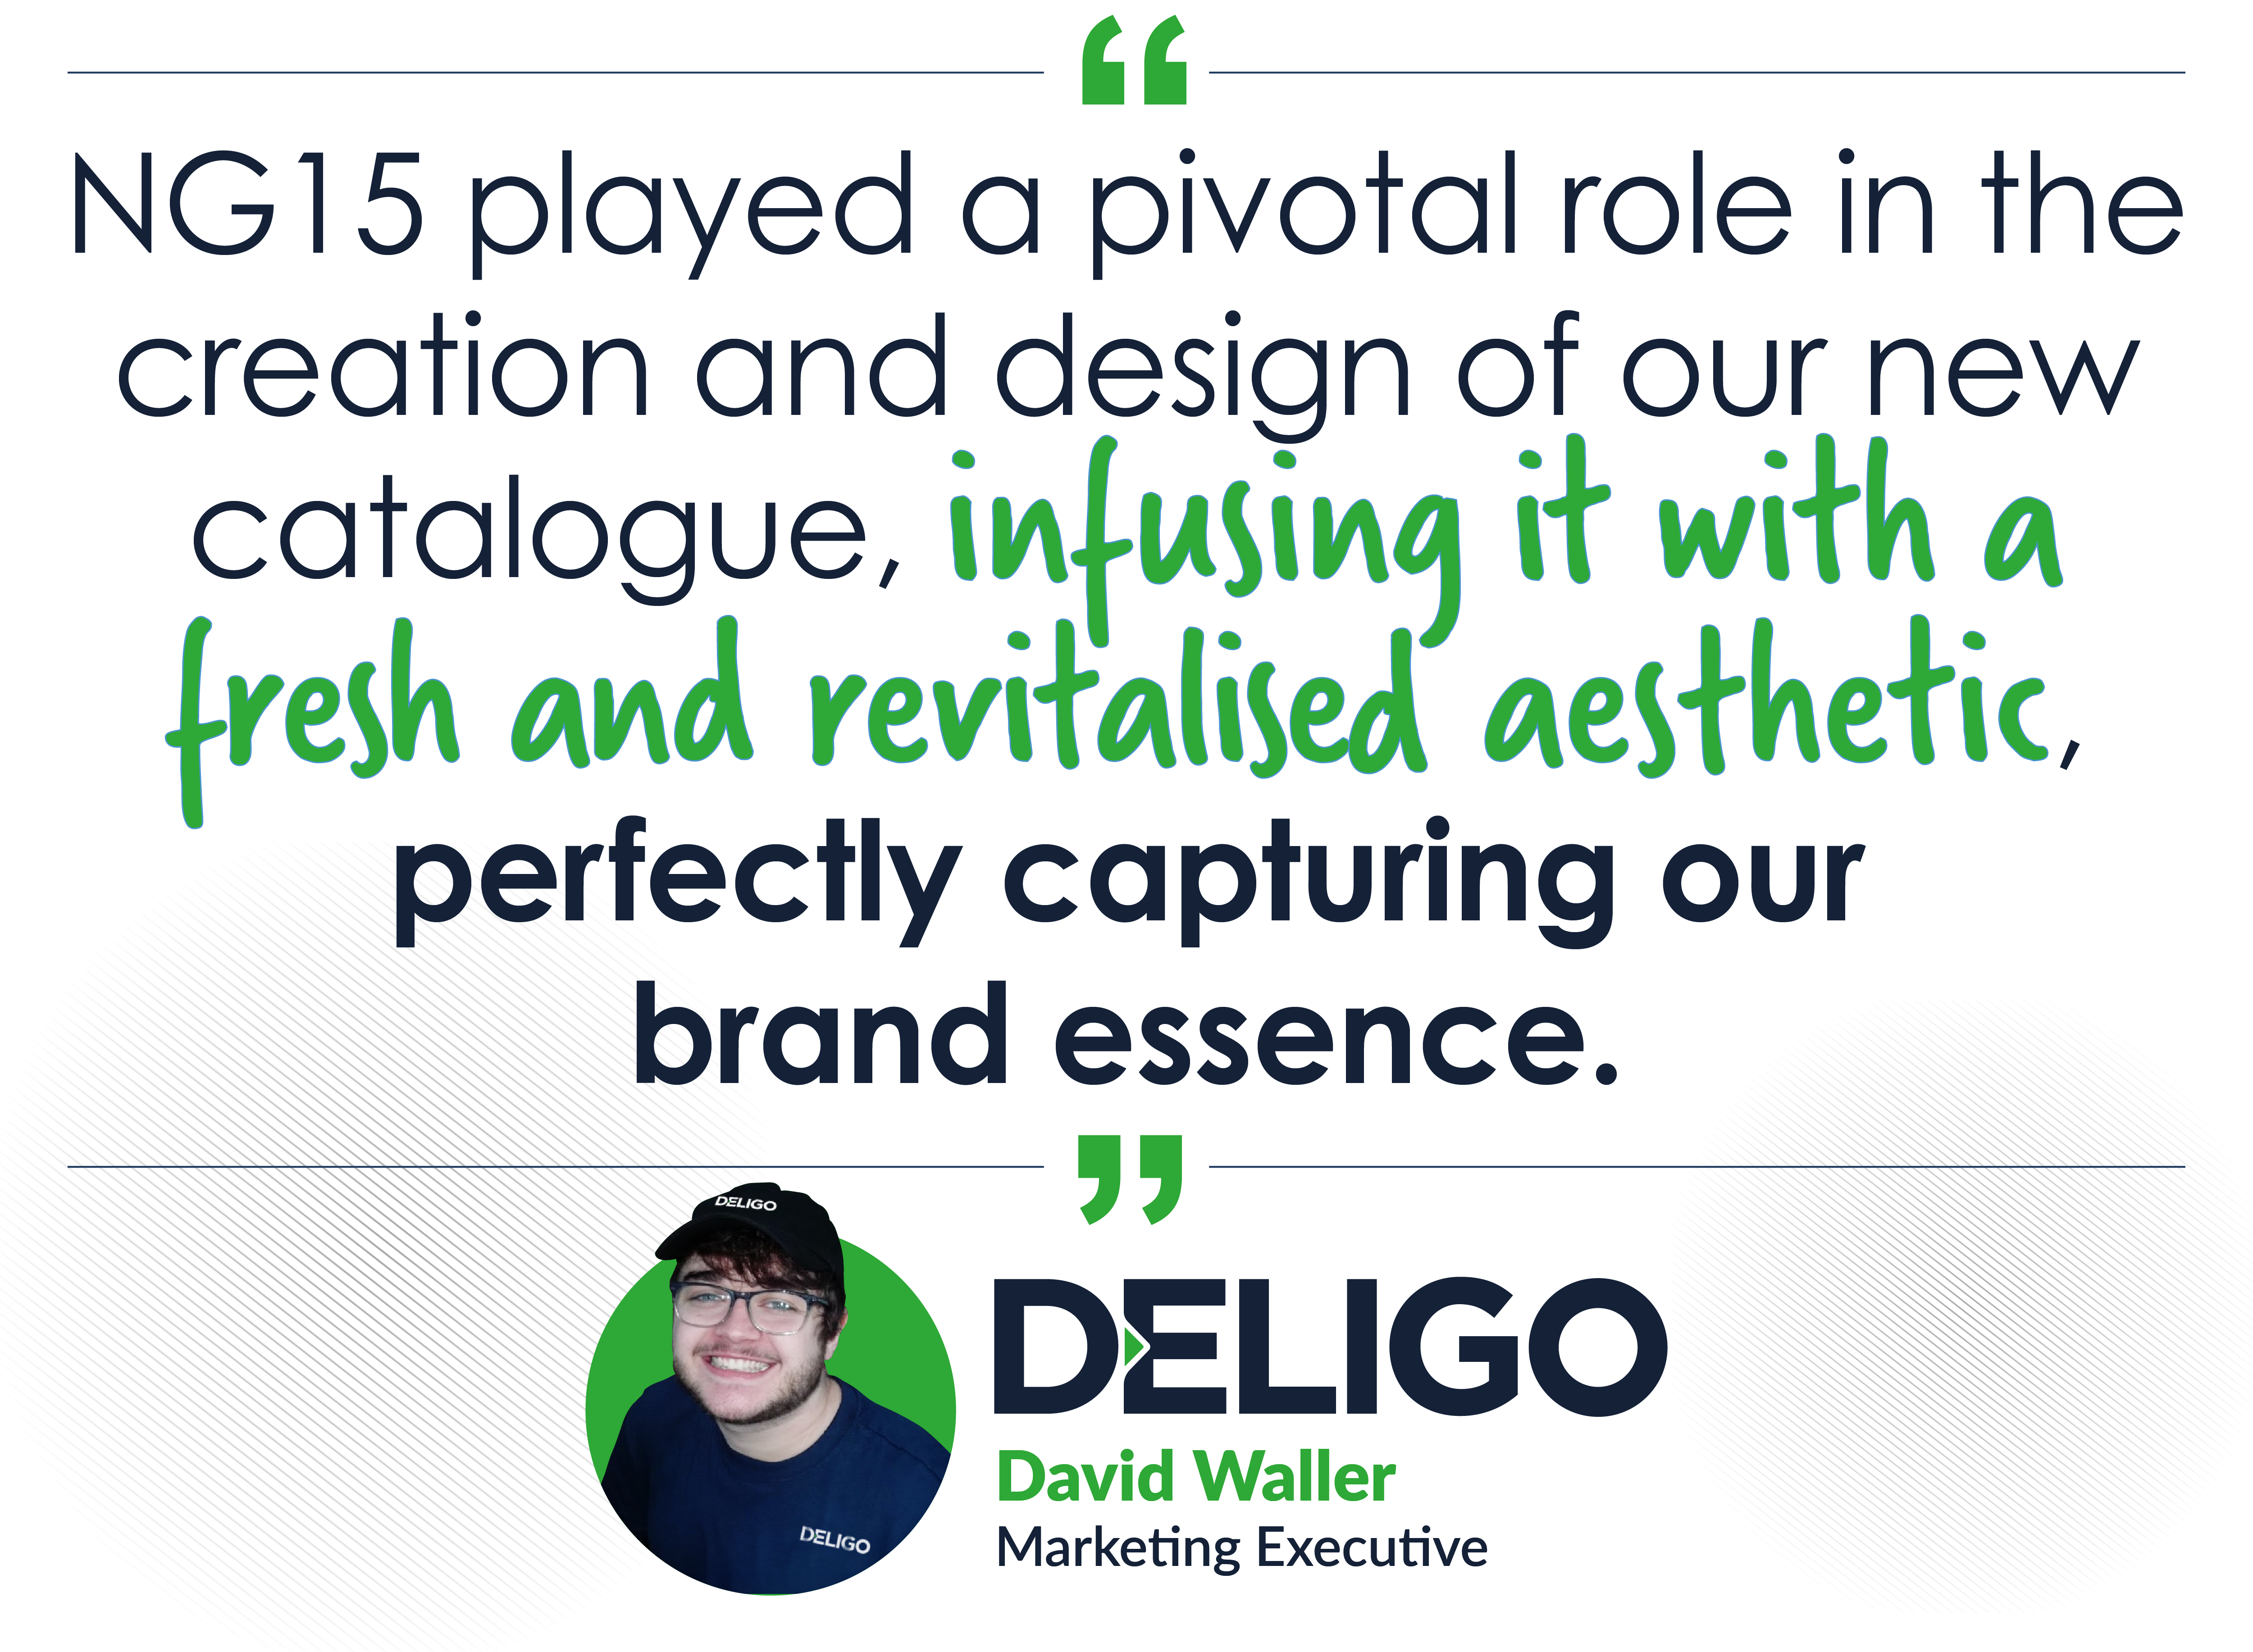 Deligo positive testimonial of working with NG15